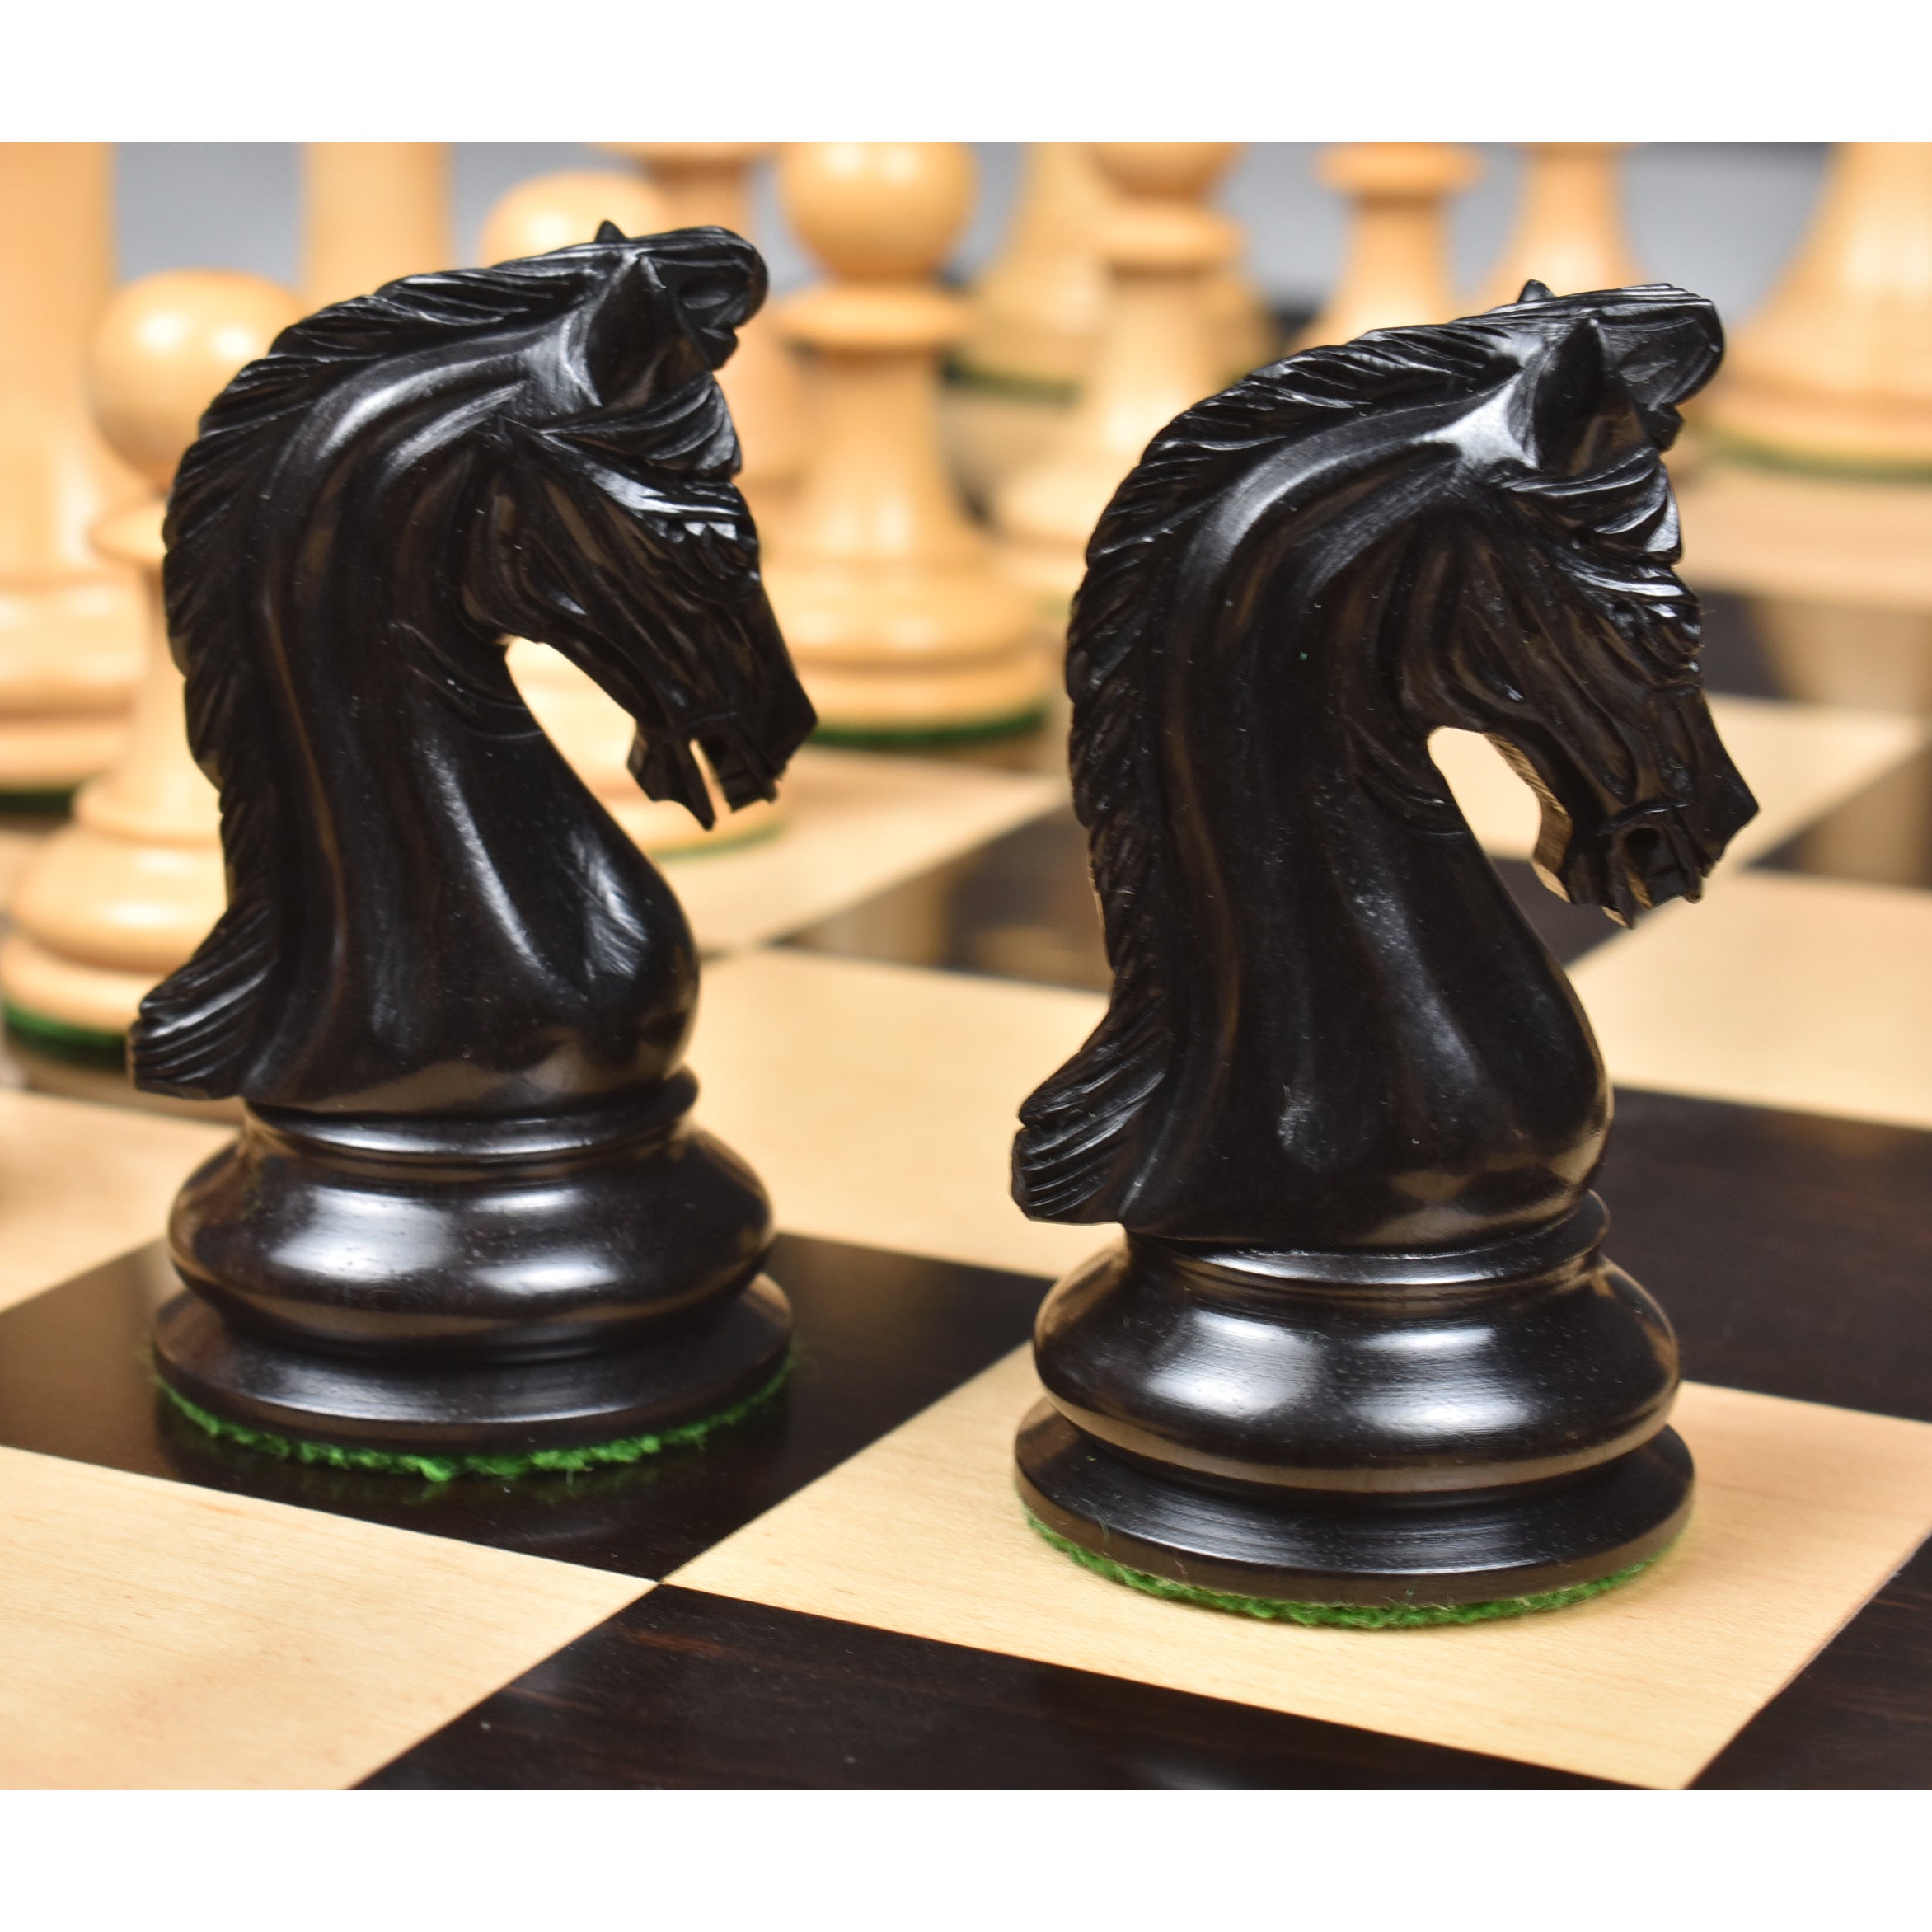 3.75 Ebony Wood Staunton Chess Pieces Set SINQUEFIELD- 2019 St. Louis  Series 4Q